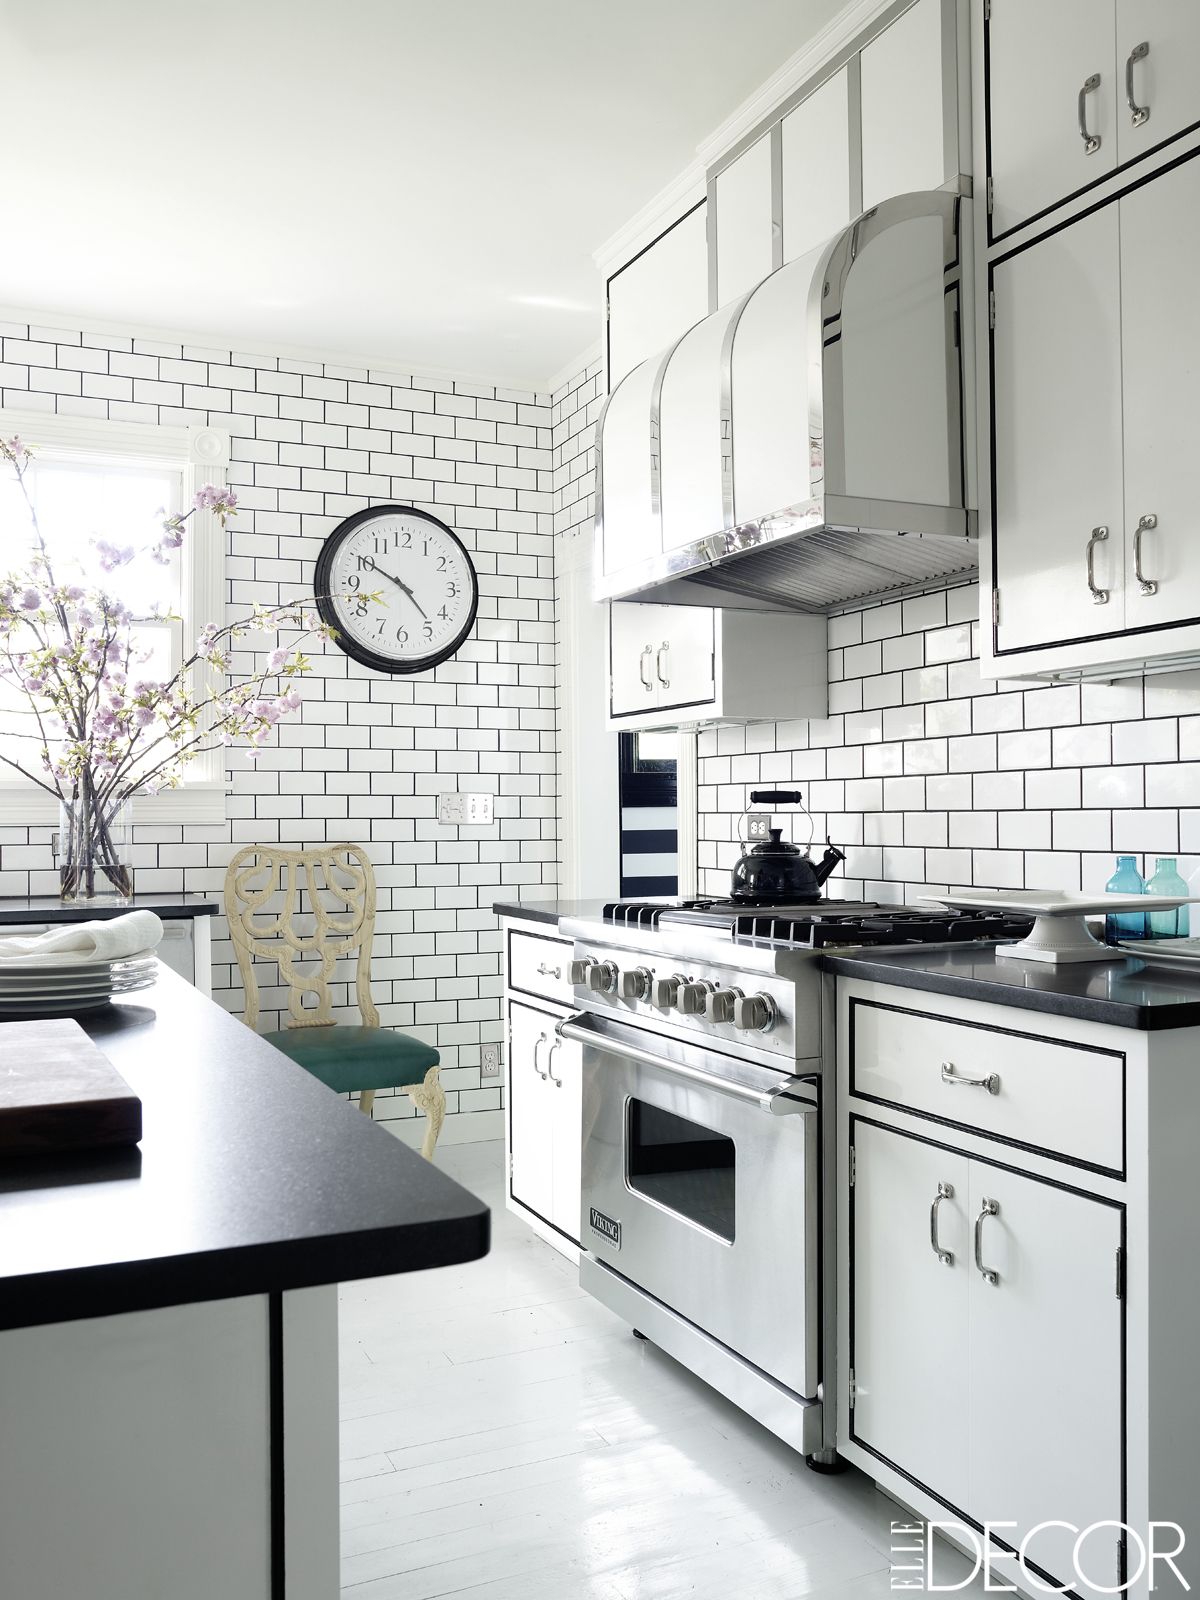 55 Small Kitchen Design Ideas Decorating Tiny Kitchens